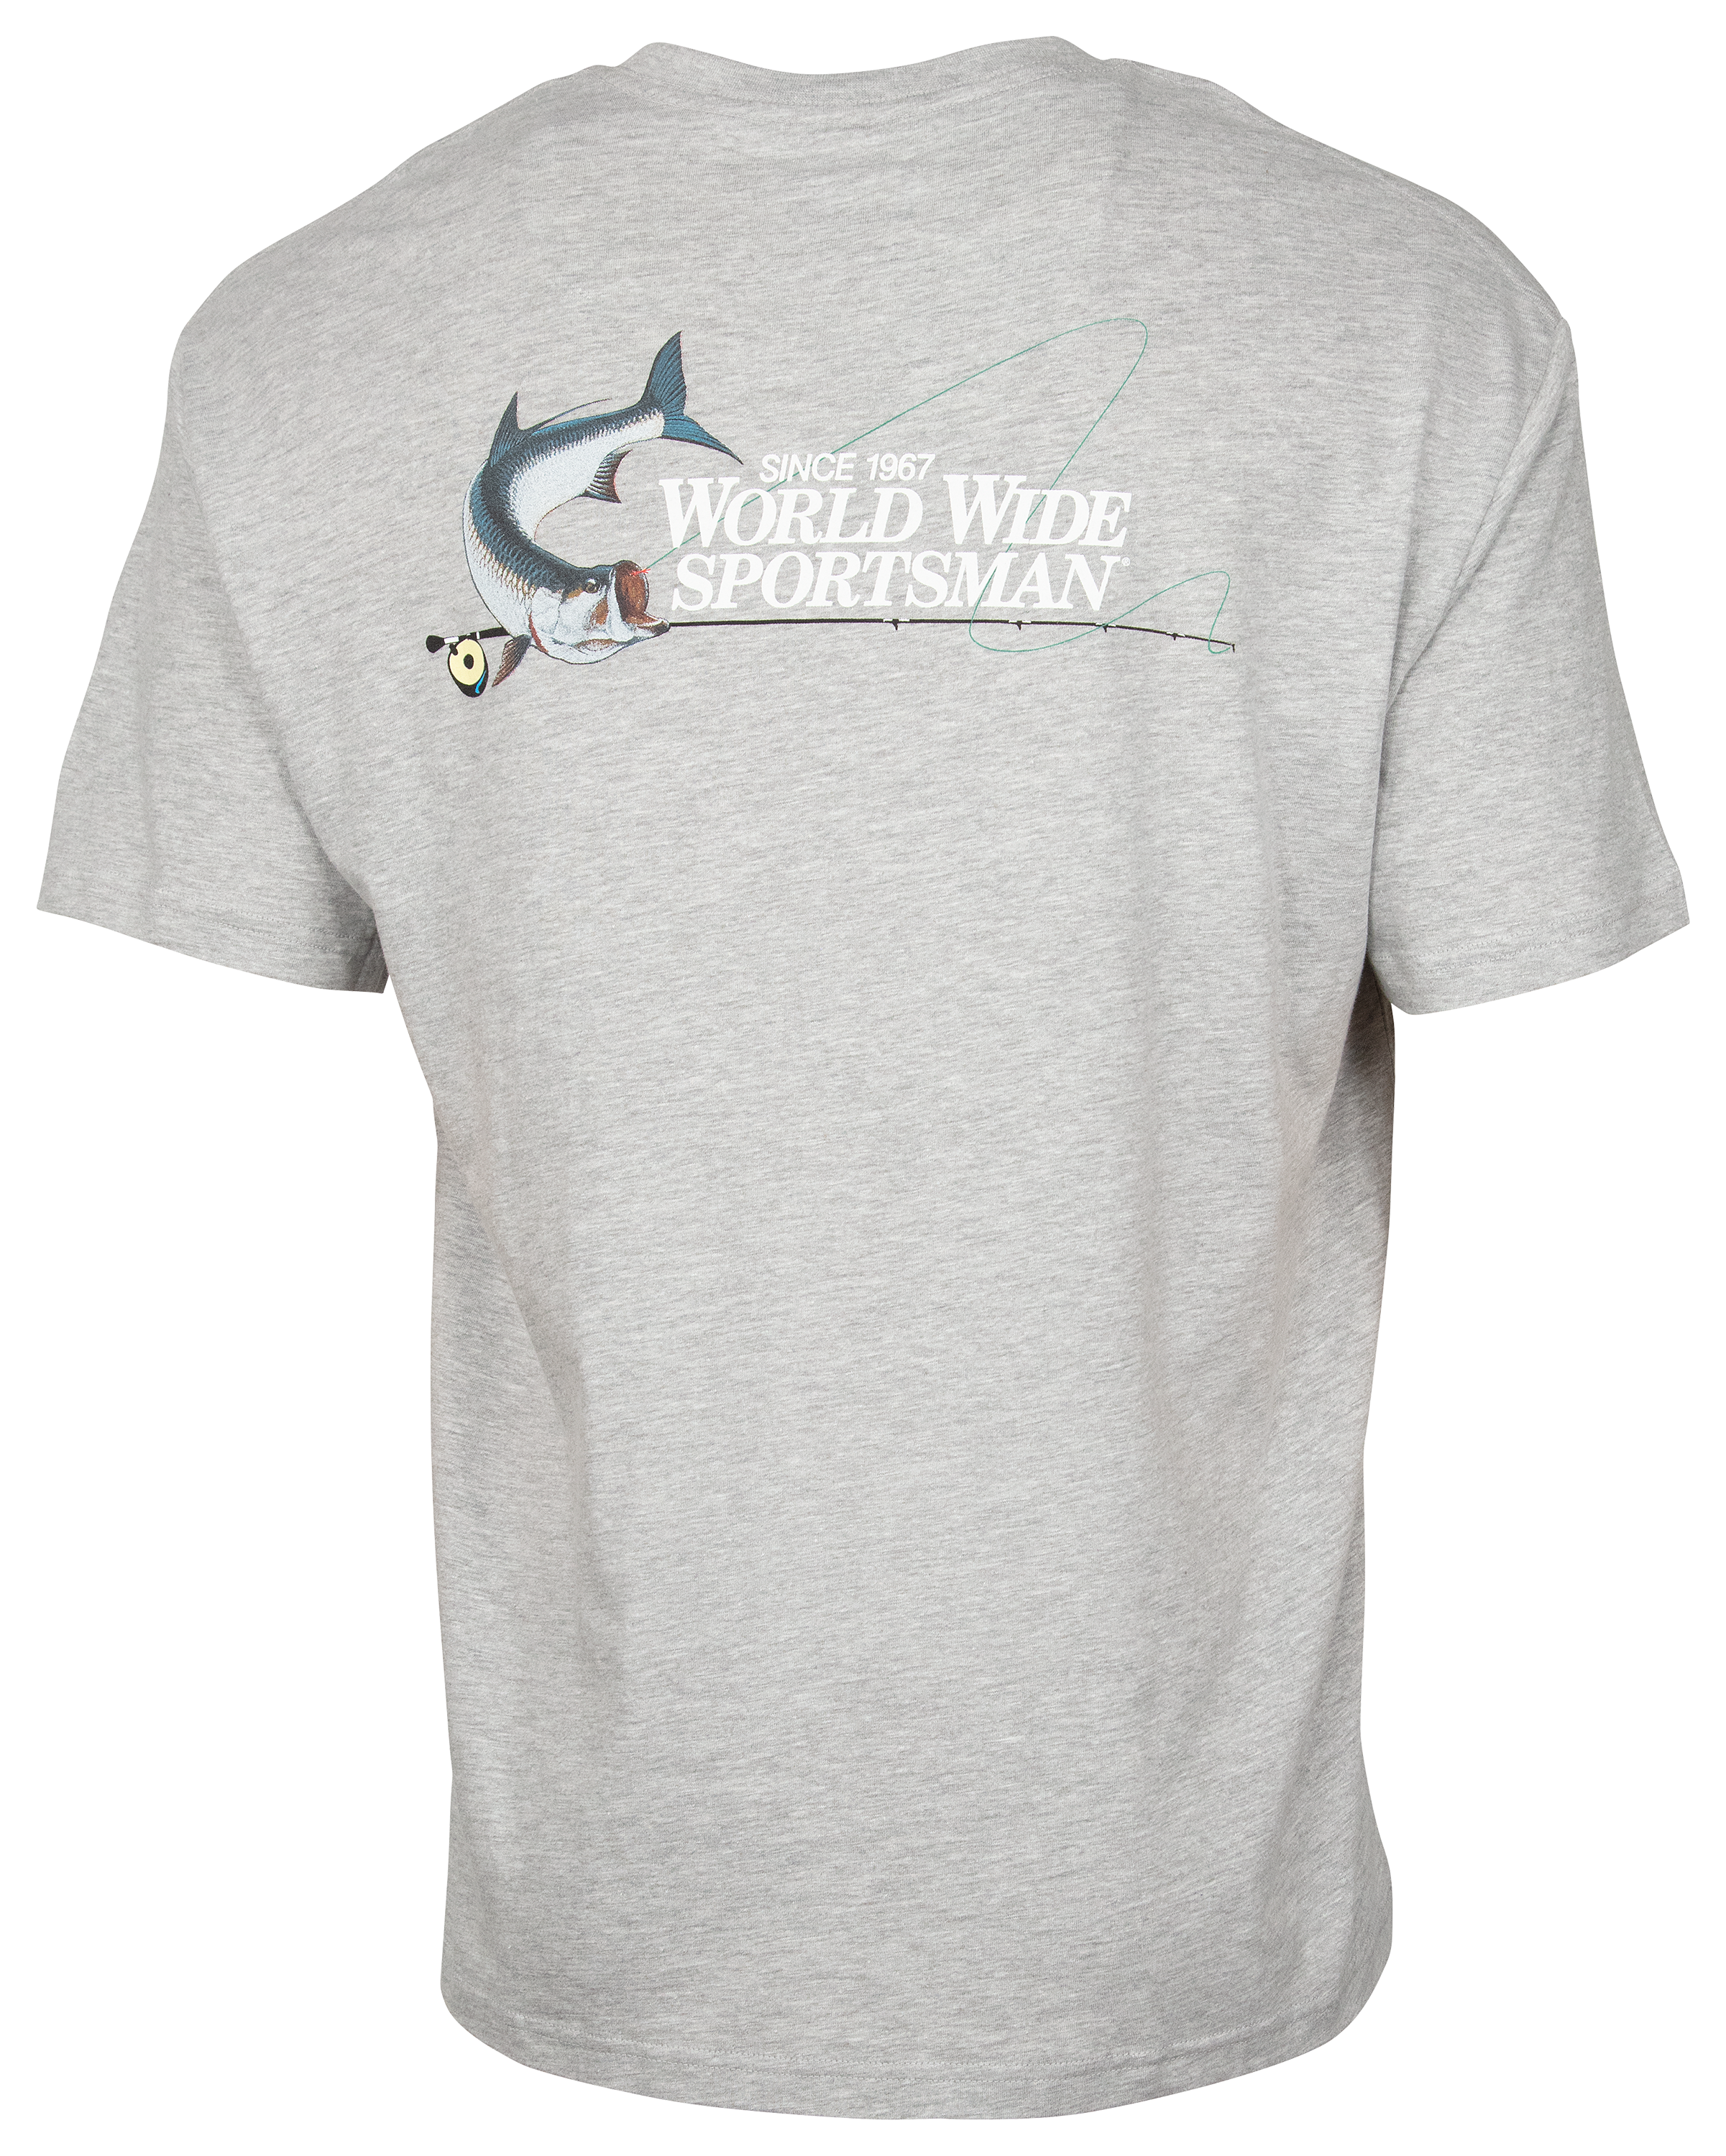 World Wide Sportsman Logo Graphic Short-Sleeve T-Shirt for Men - Heather Gray - S